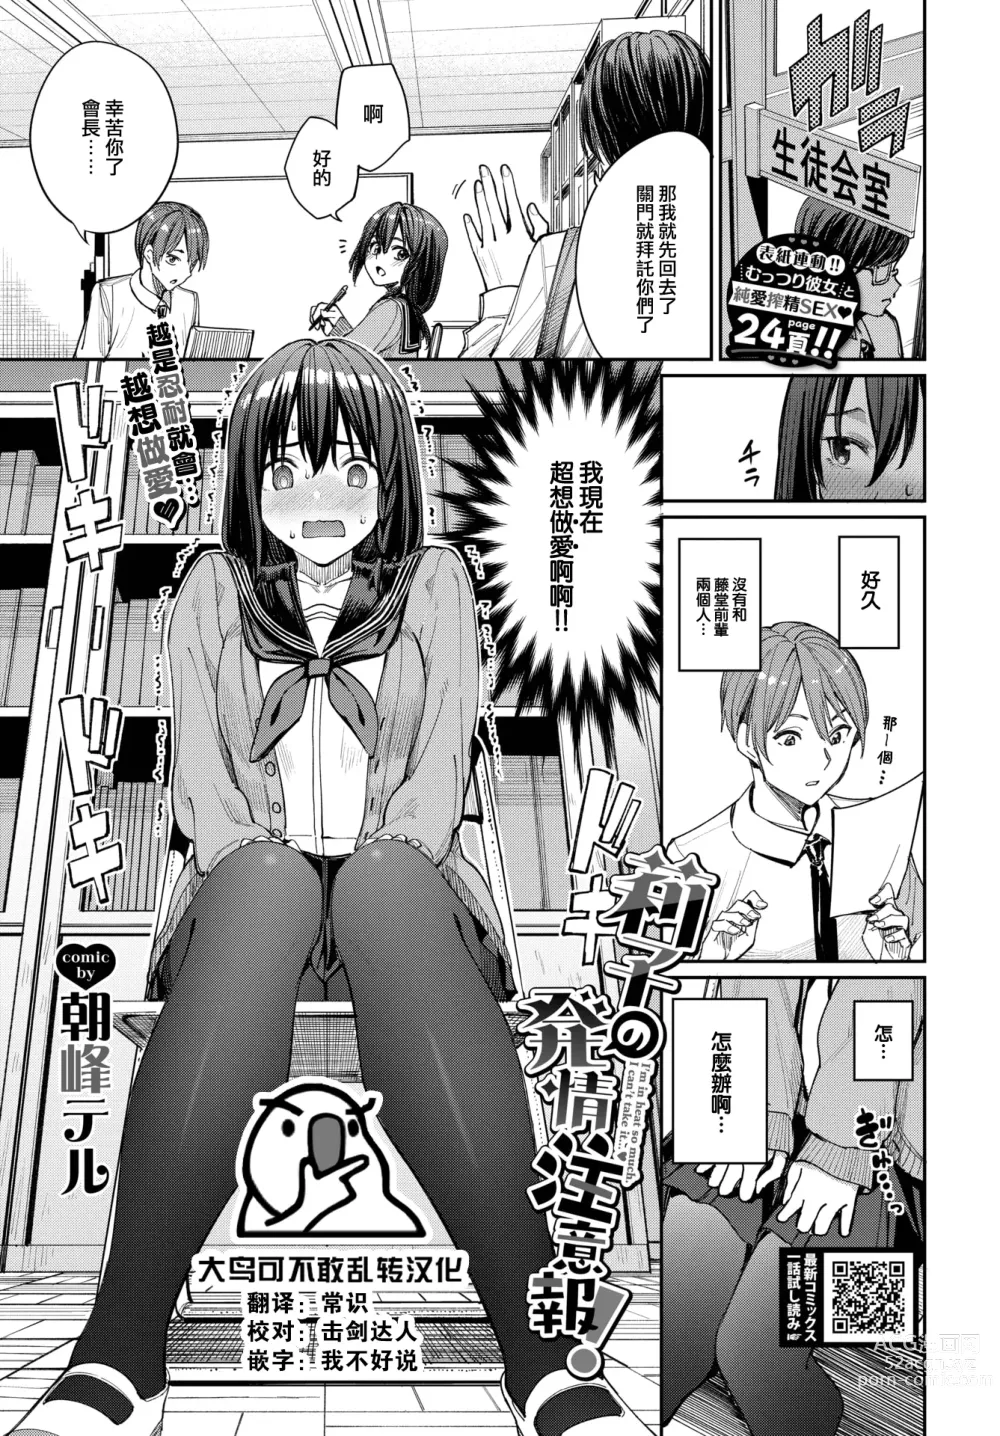 Page 2 of manga Riko no Hatsujou Chuuihou! - Im in heat so much. I can't take it...